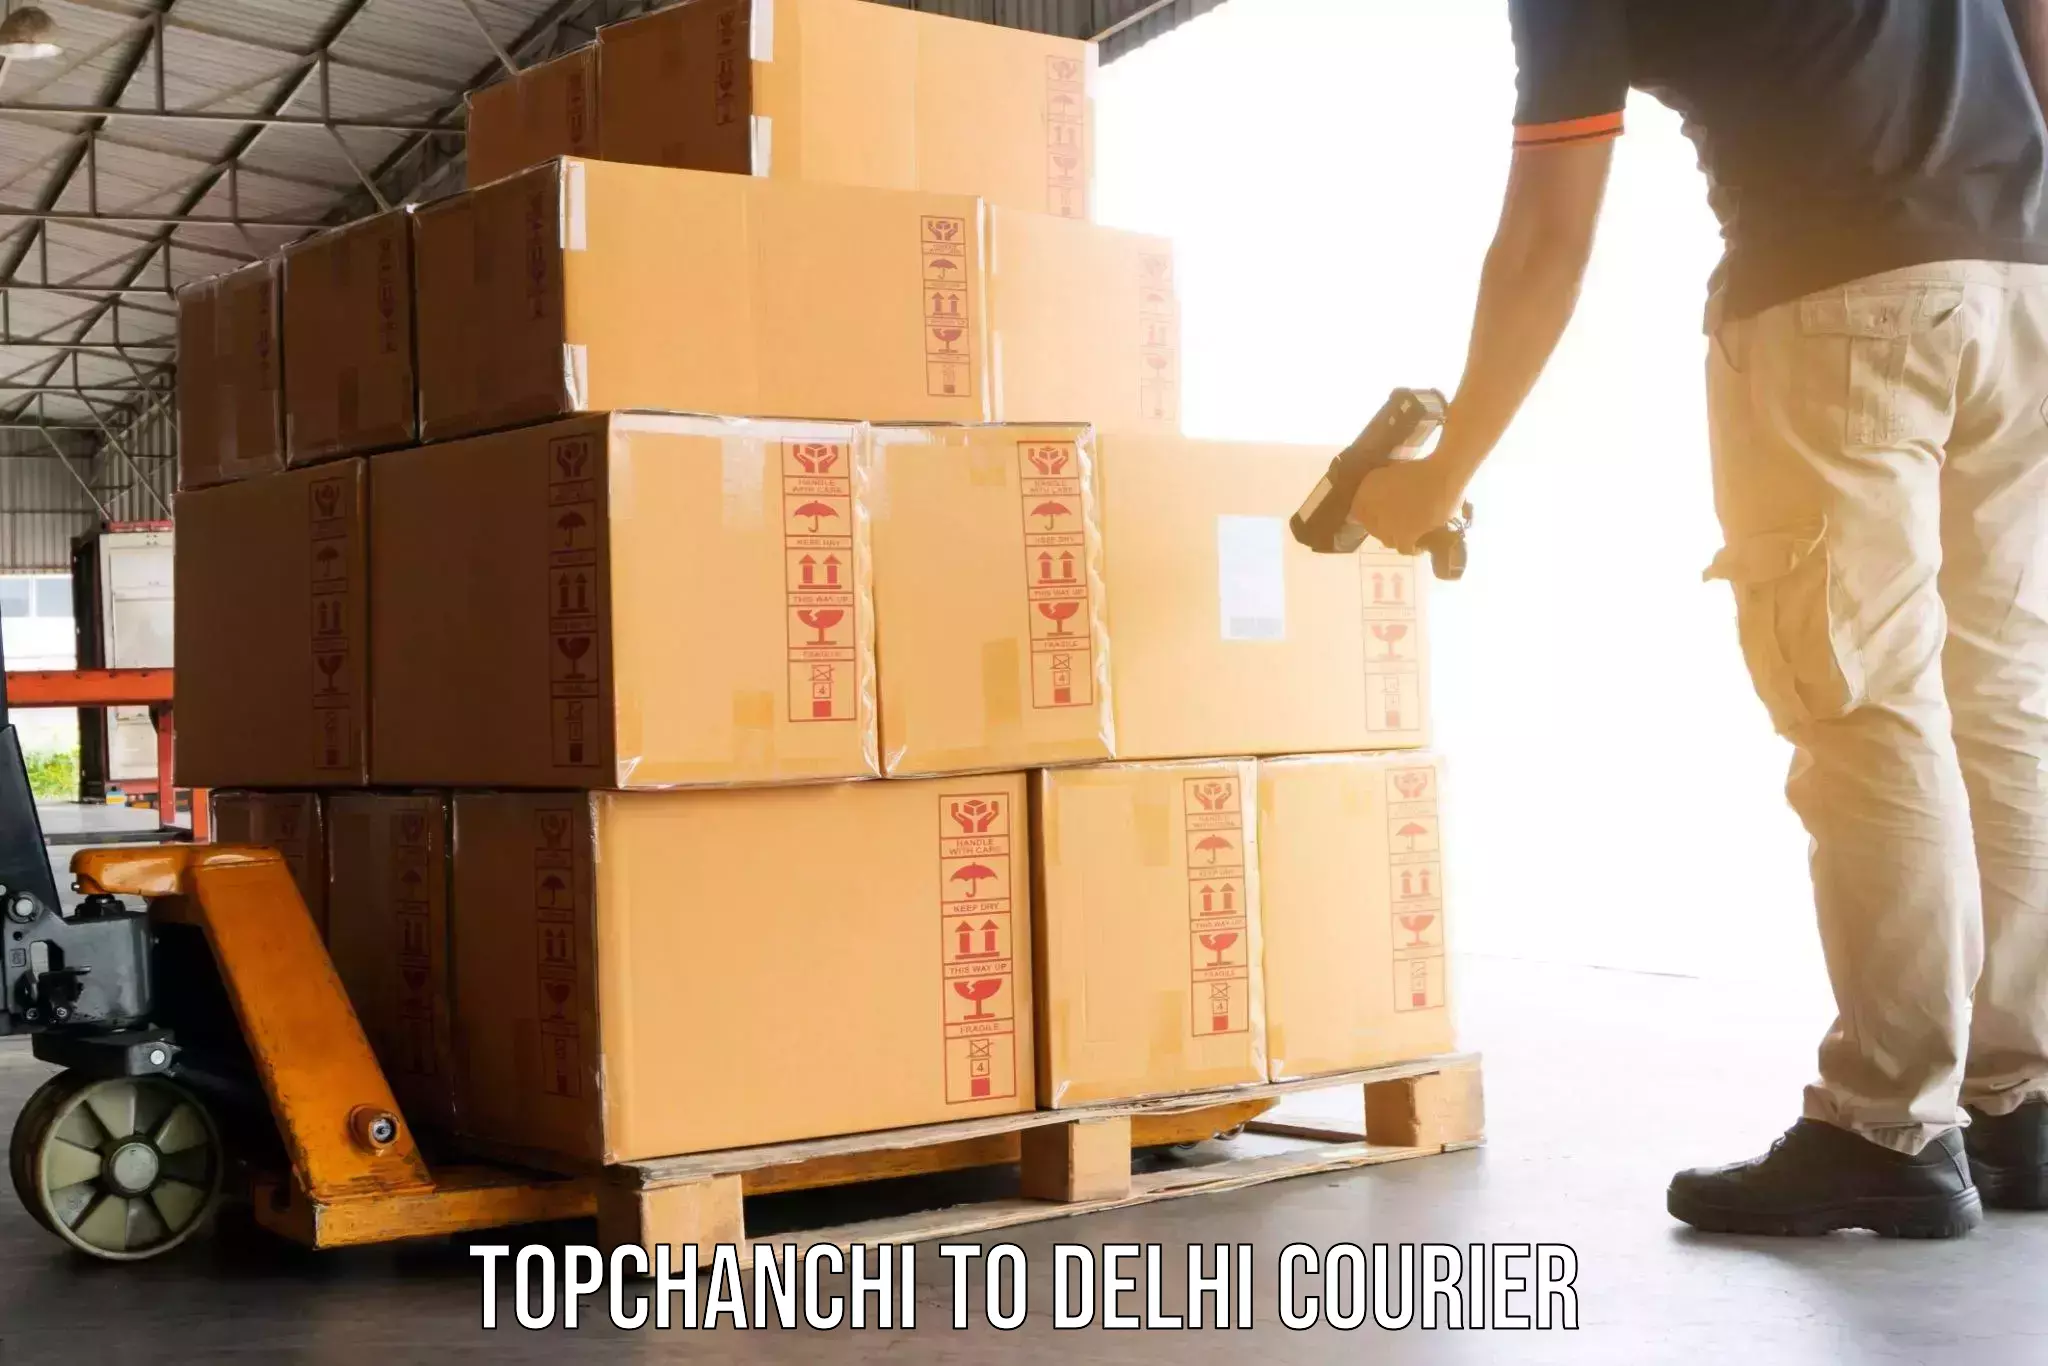 Professional moving company Topchanchi to East Delhi